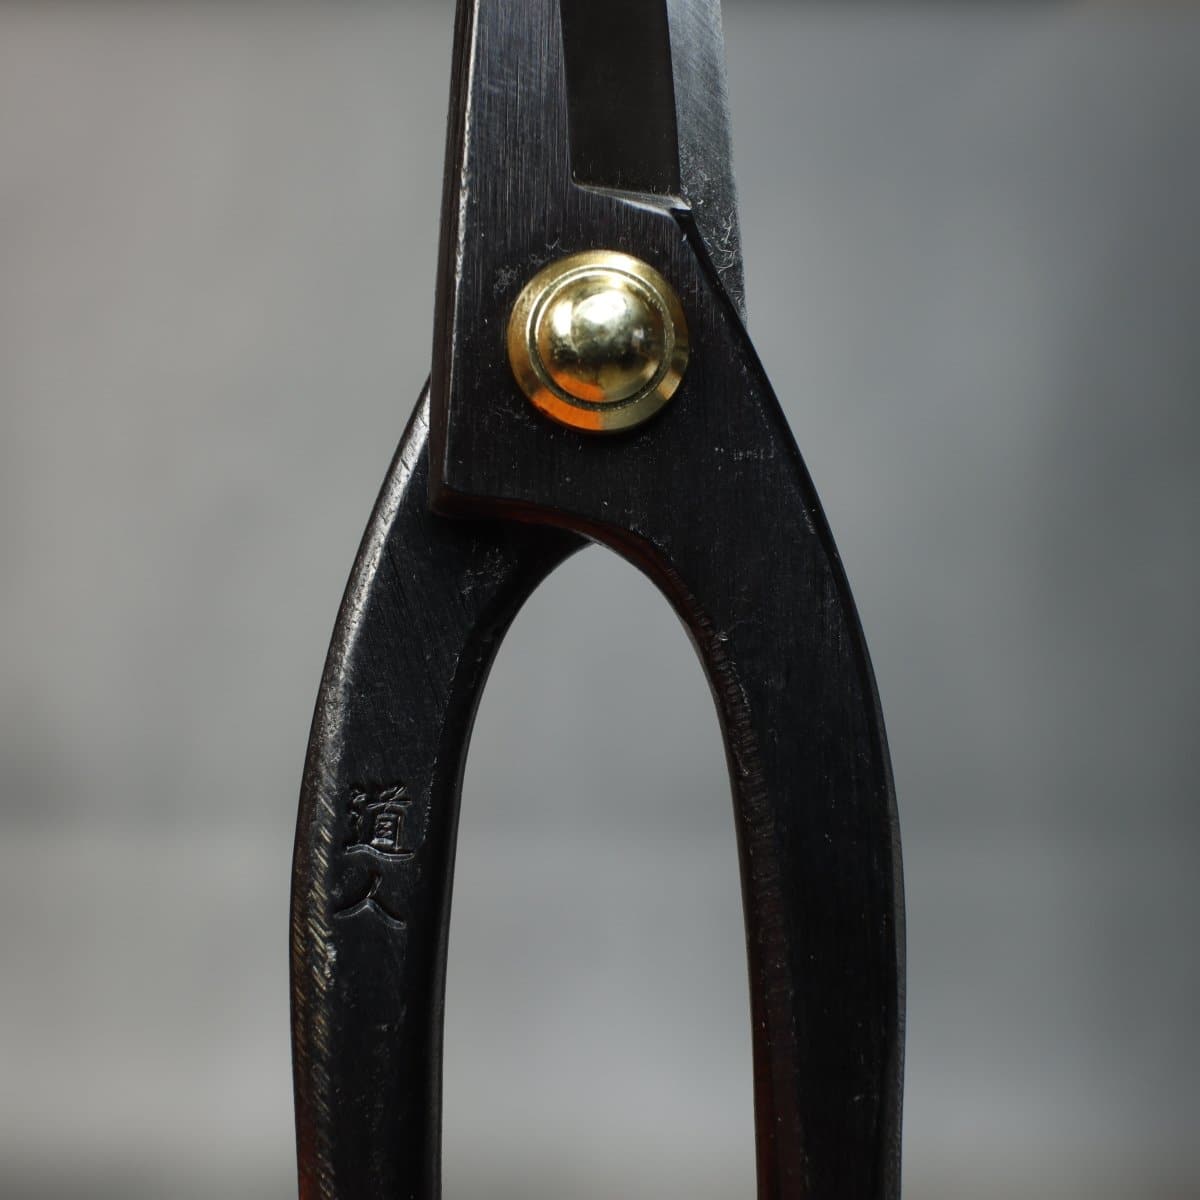 200mm Bonsai Scissors makers mark